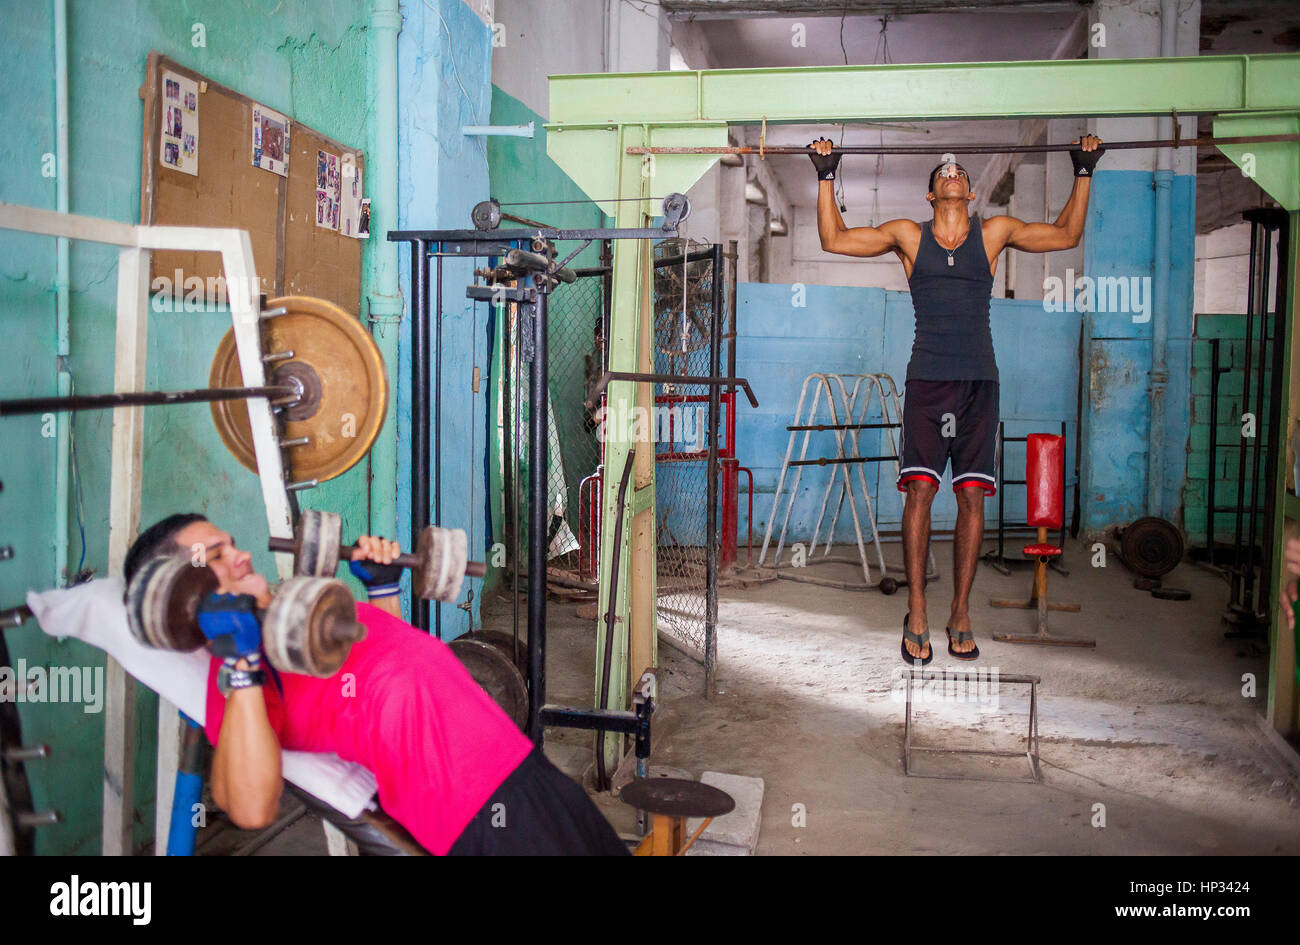 Body builder, muscleman, A Cuban men does exercise at a bodybuilding gym, in San Rafael street, Centro Habana, La Habana, Cuba Stock Photo